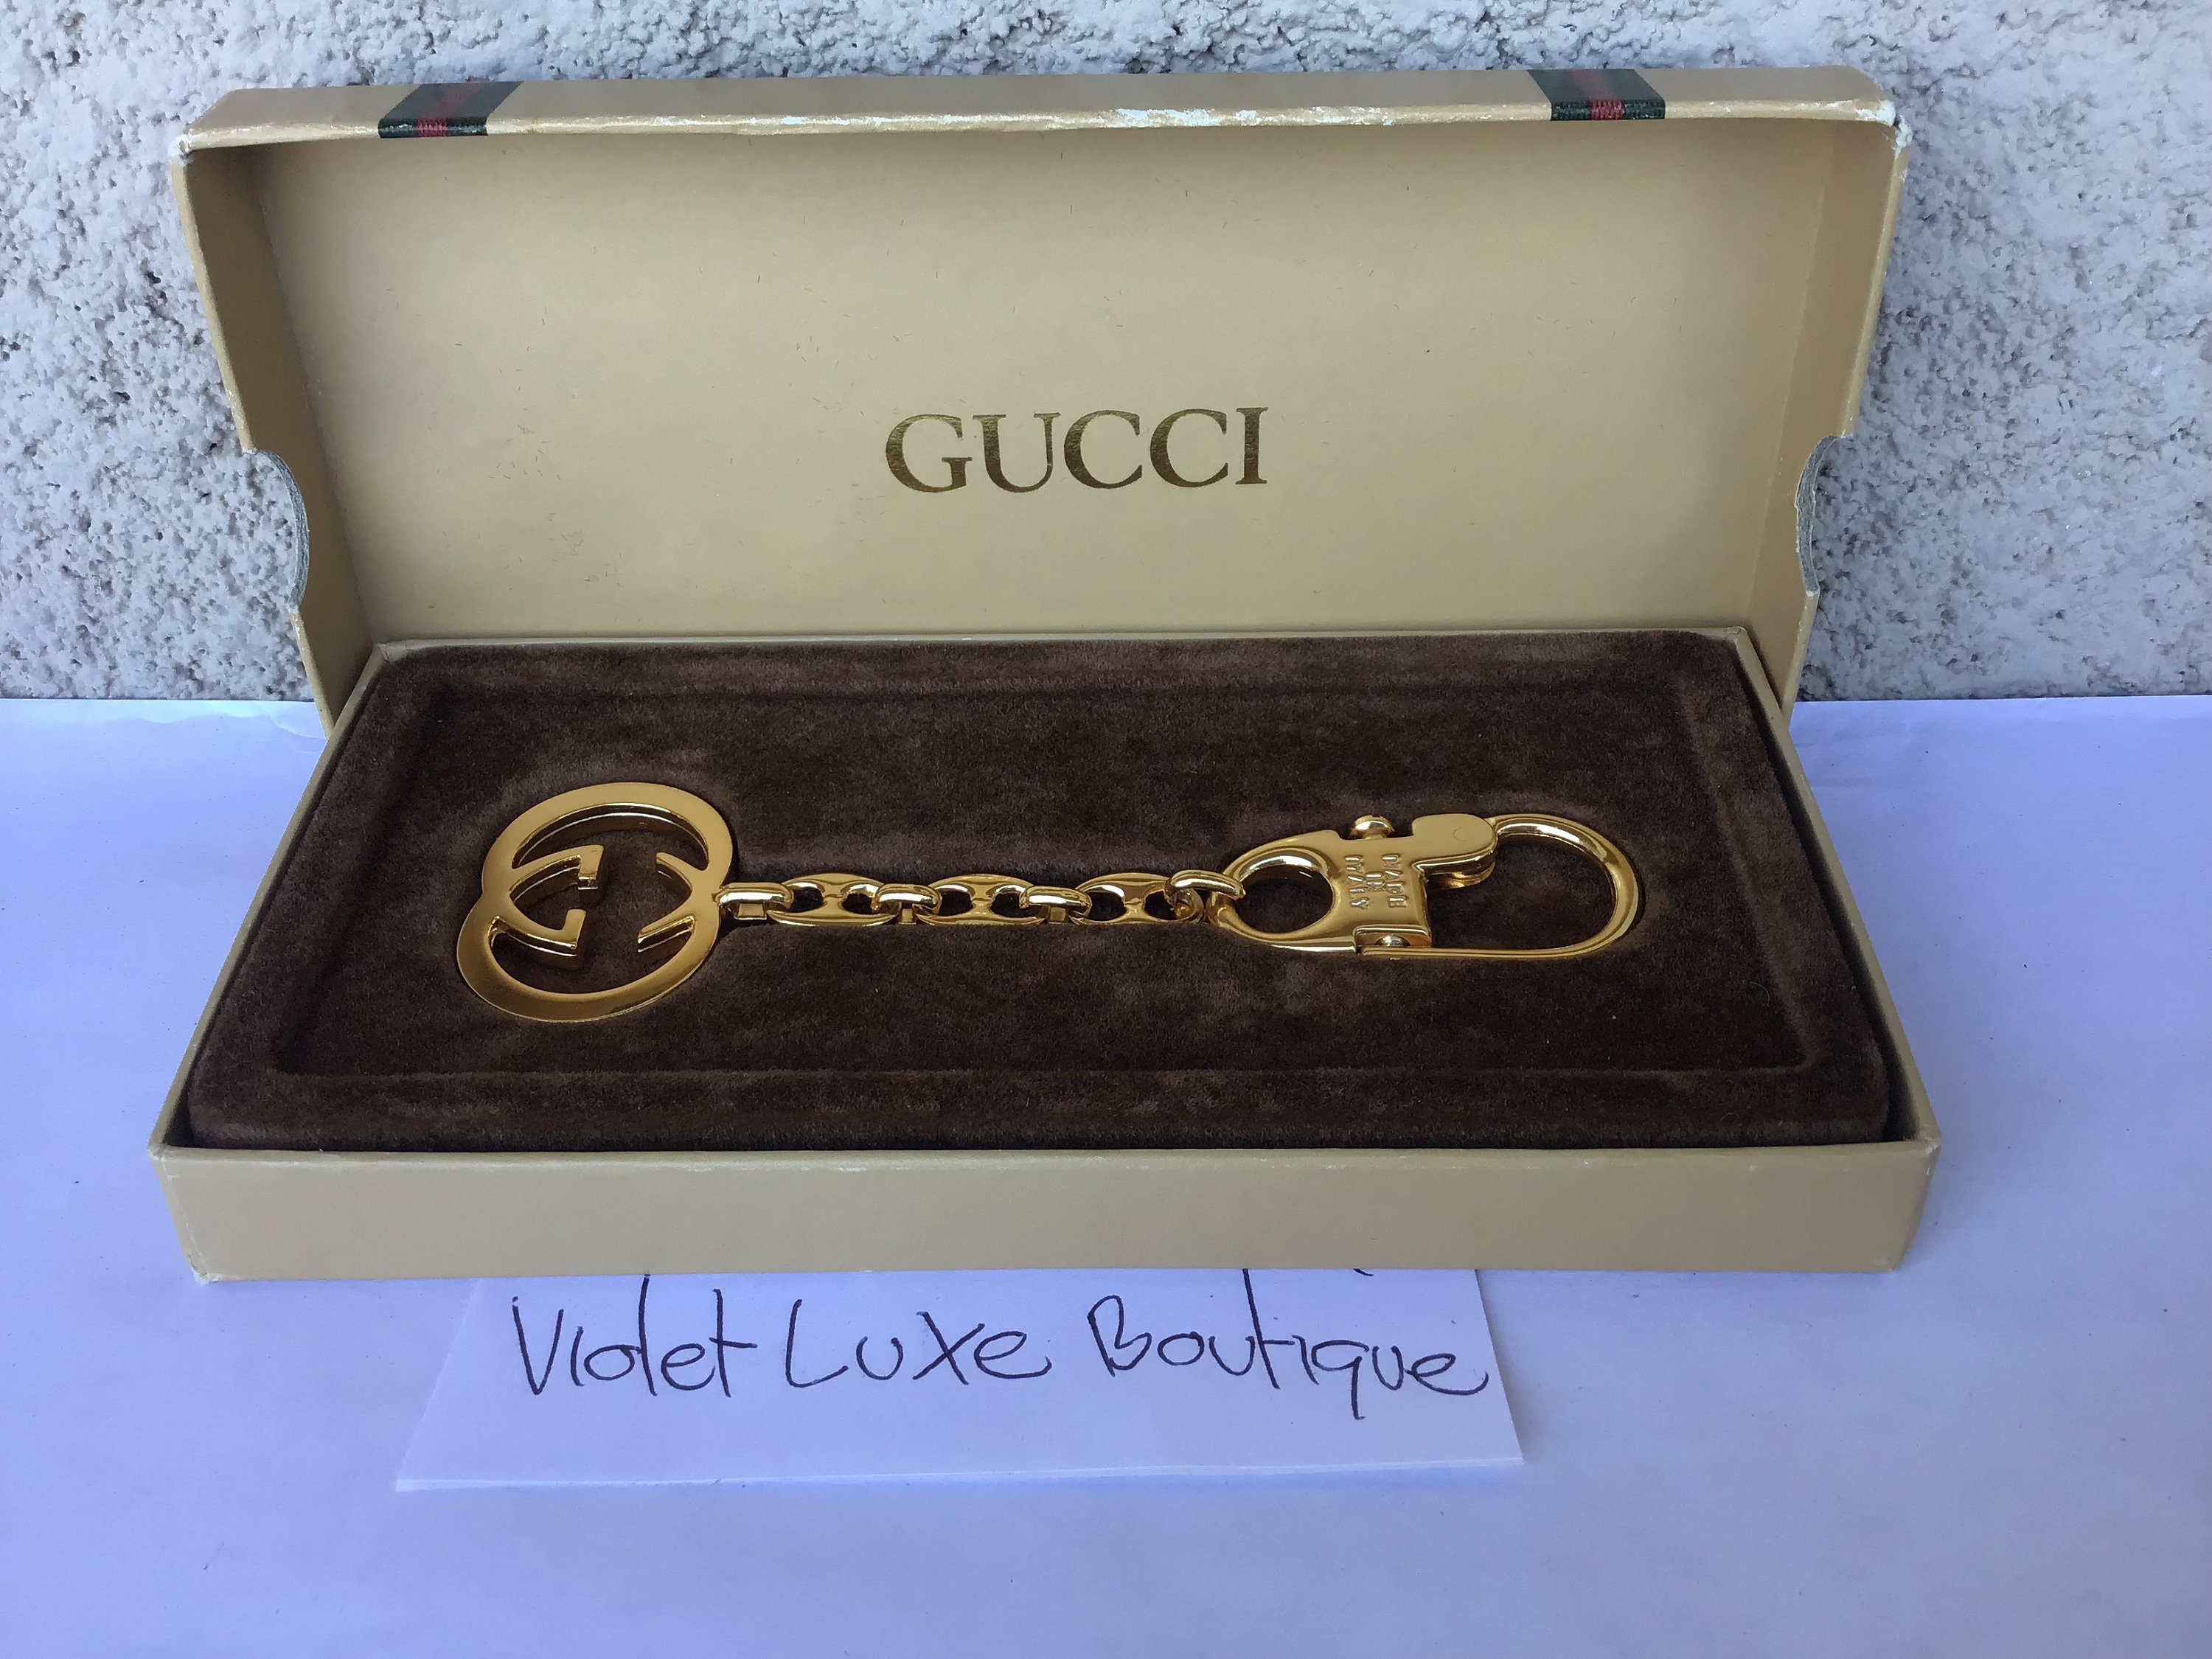 Louis Vuitton Bag Charm Keyring Keychain Shiba Inu Monogram Rare With box